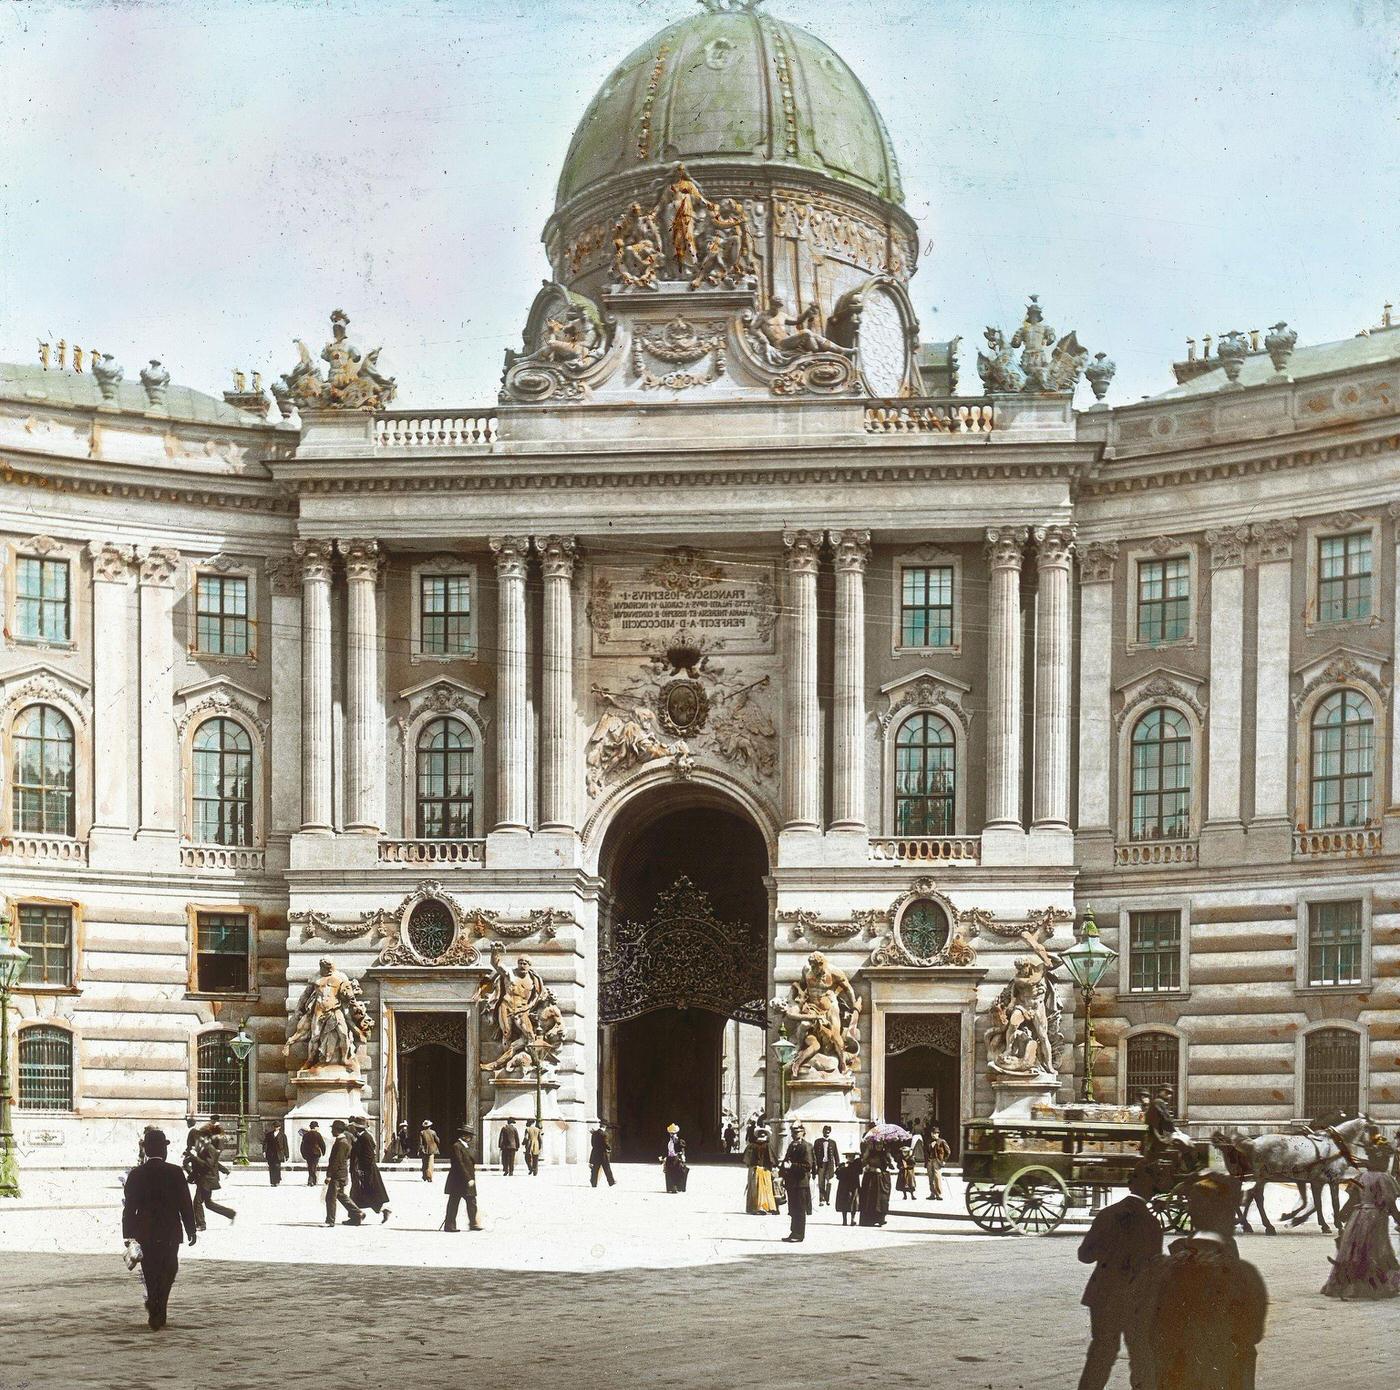 Michaelerplatz square and Michaelertor of the Hofburg in Vienna's 1st district, 1905.